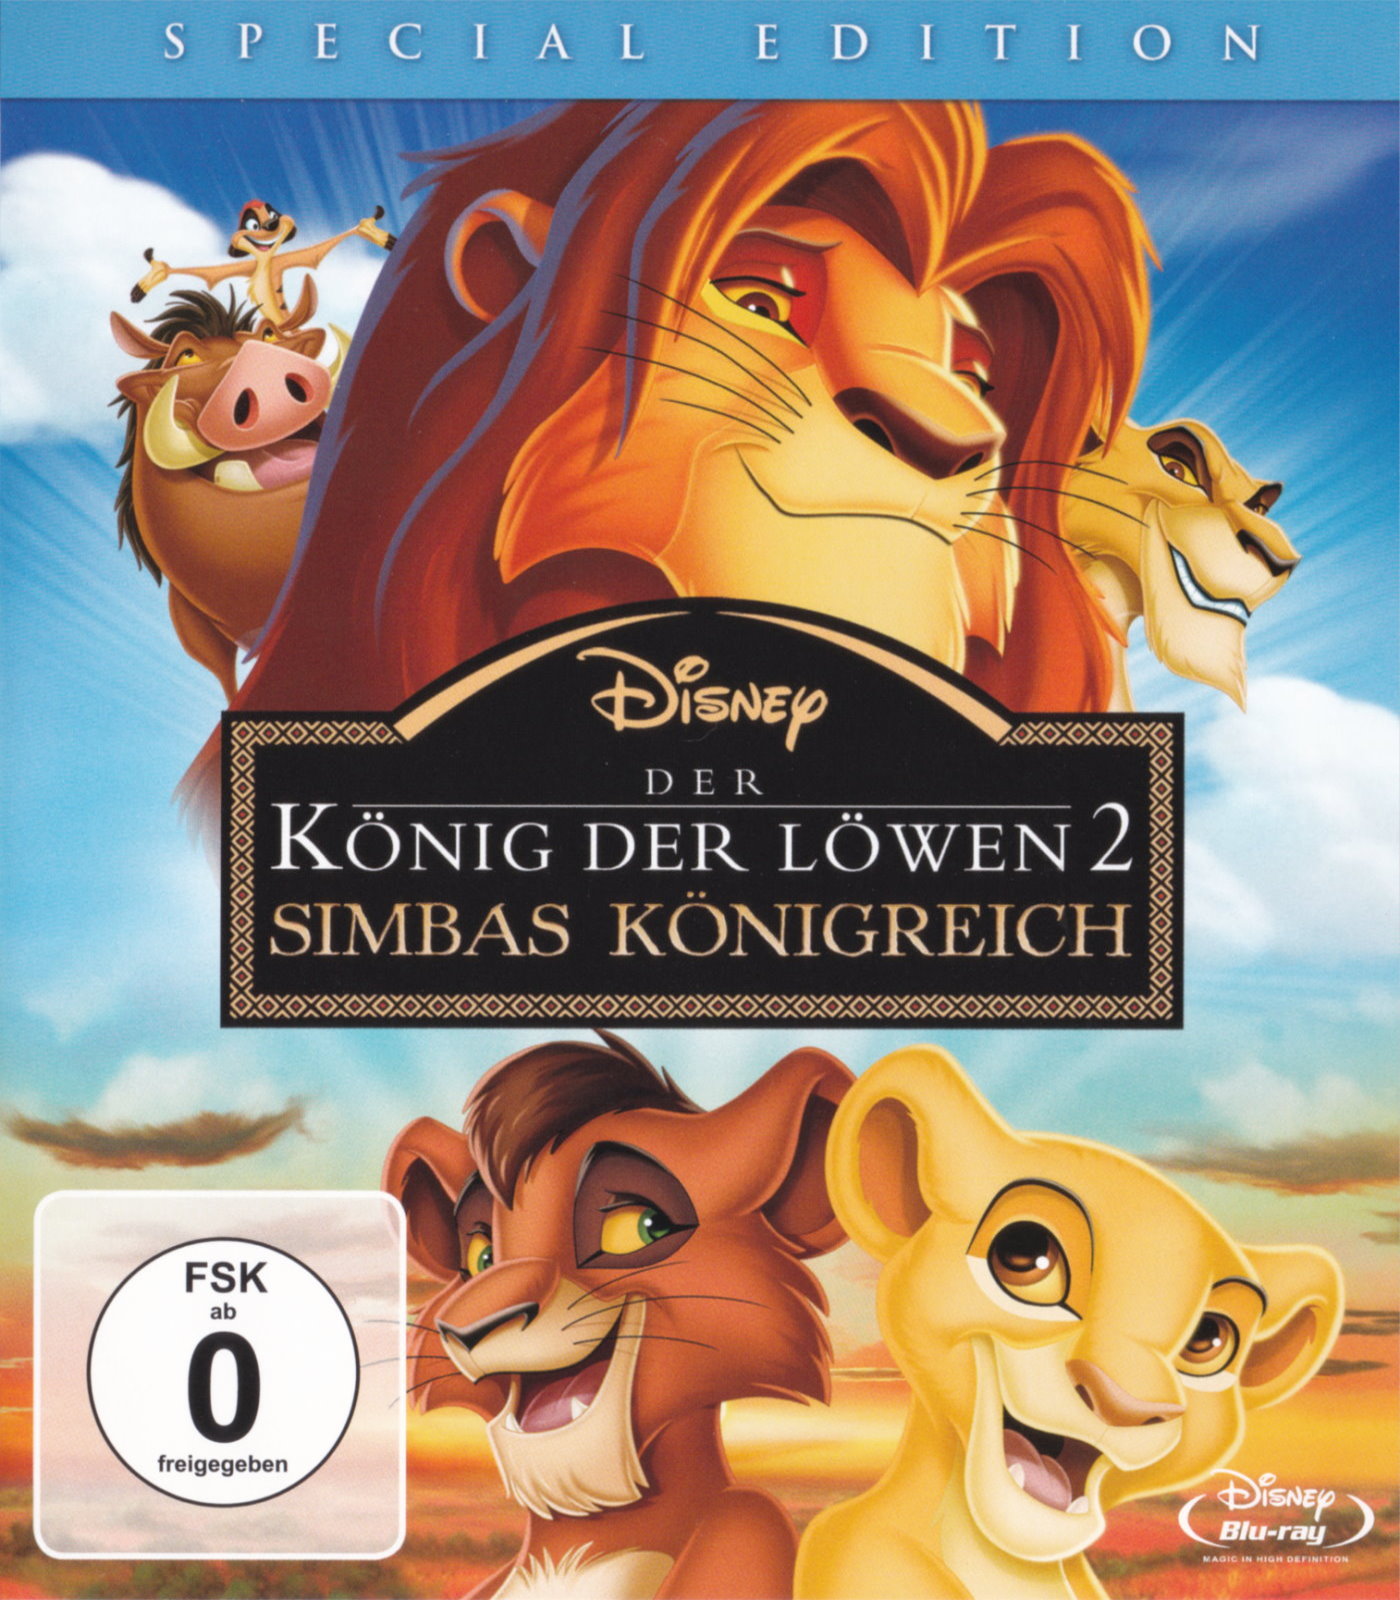 Cover - Der König der Löwen 2 - Simbas Königreich.jpg